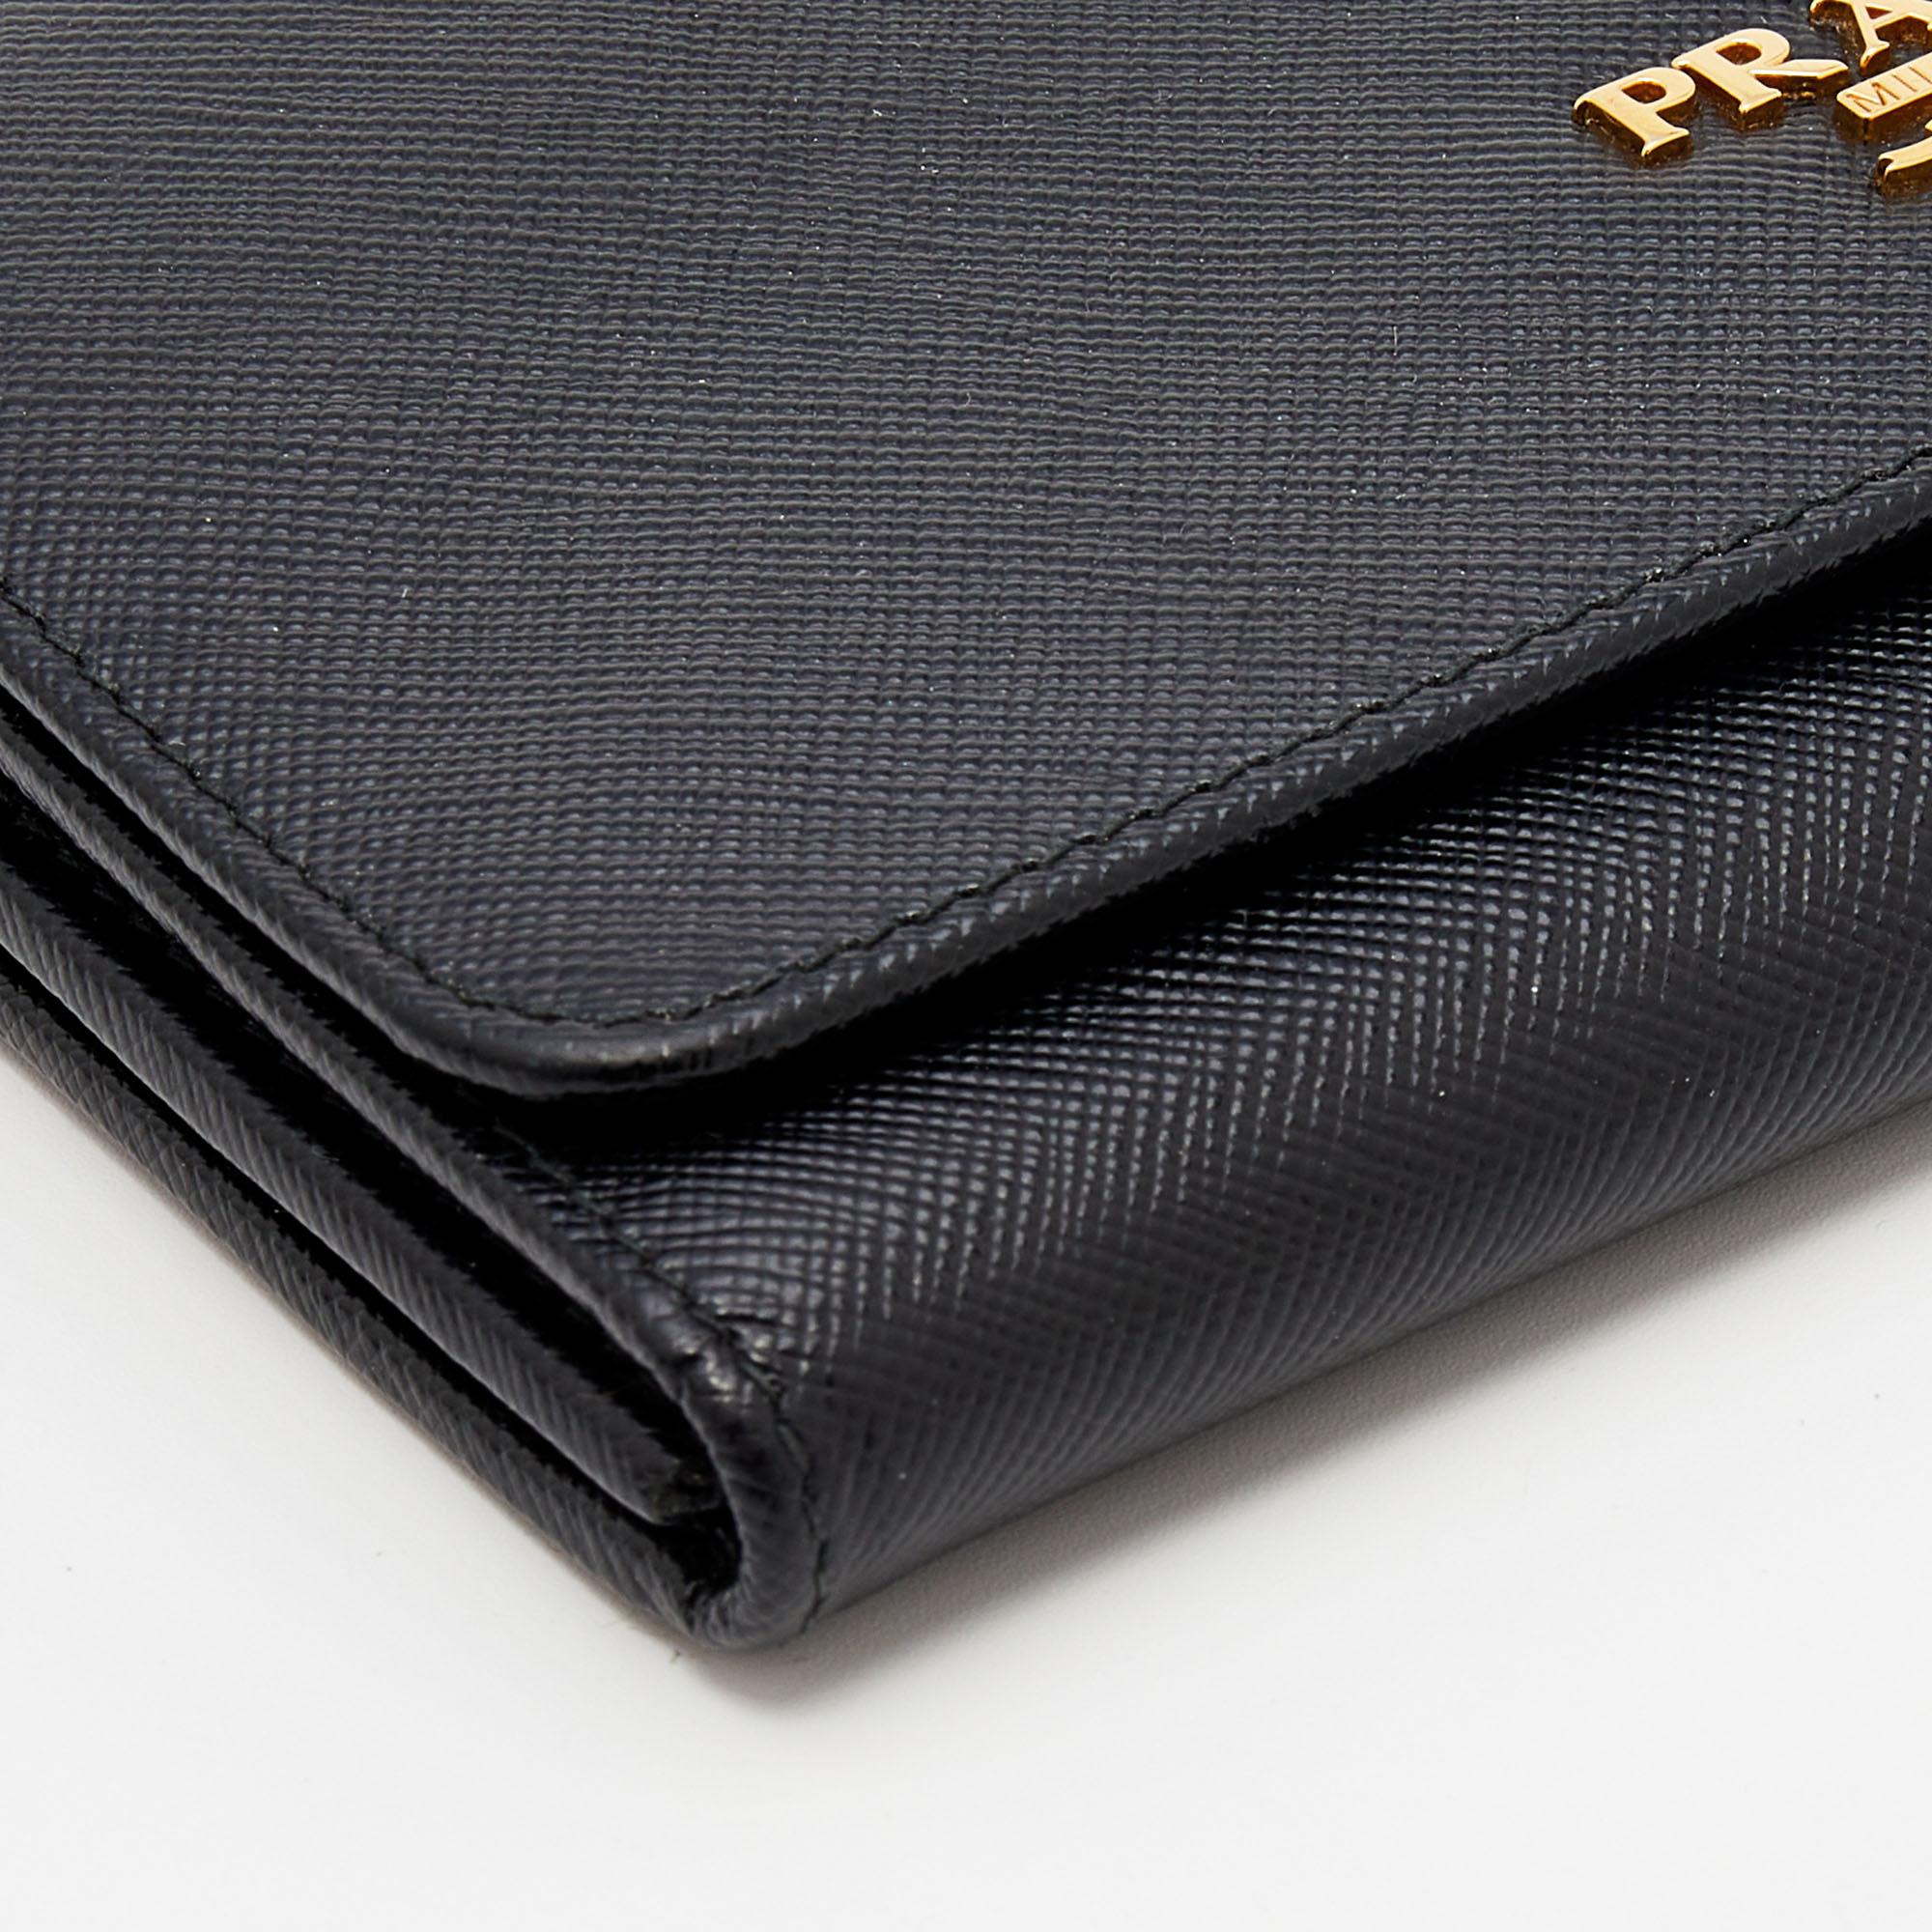 Prada Black Saffiano Leather Wallet On Strap 4